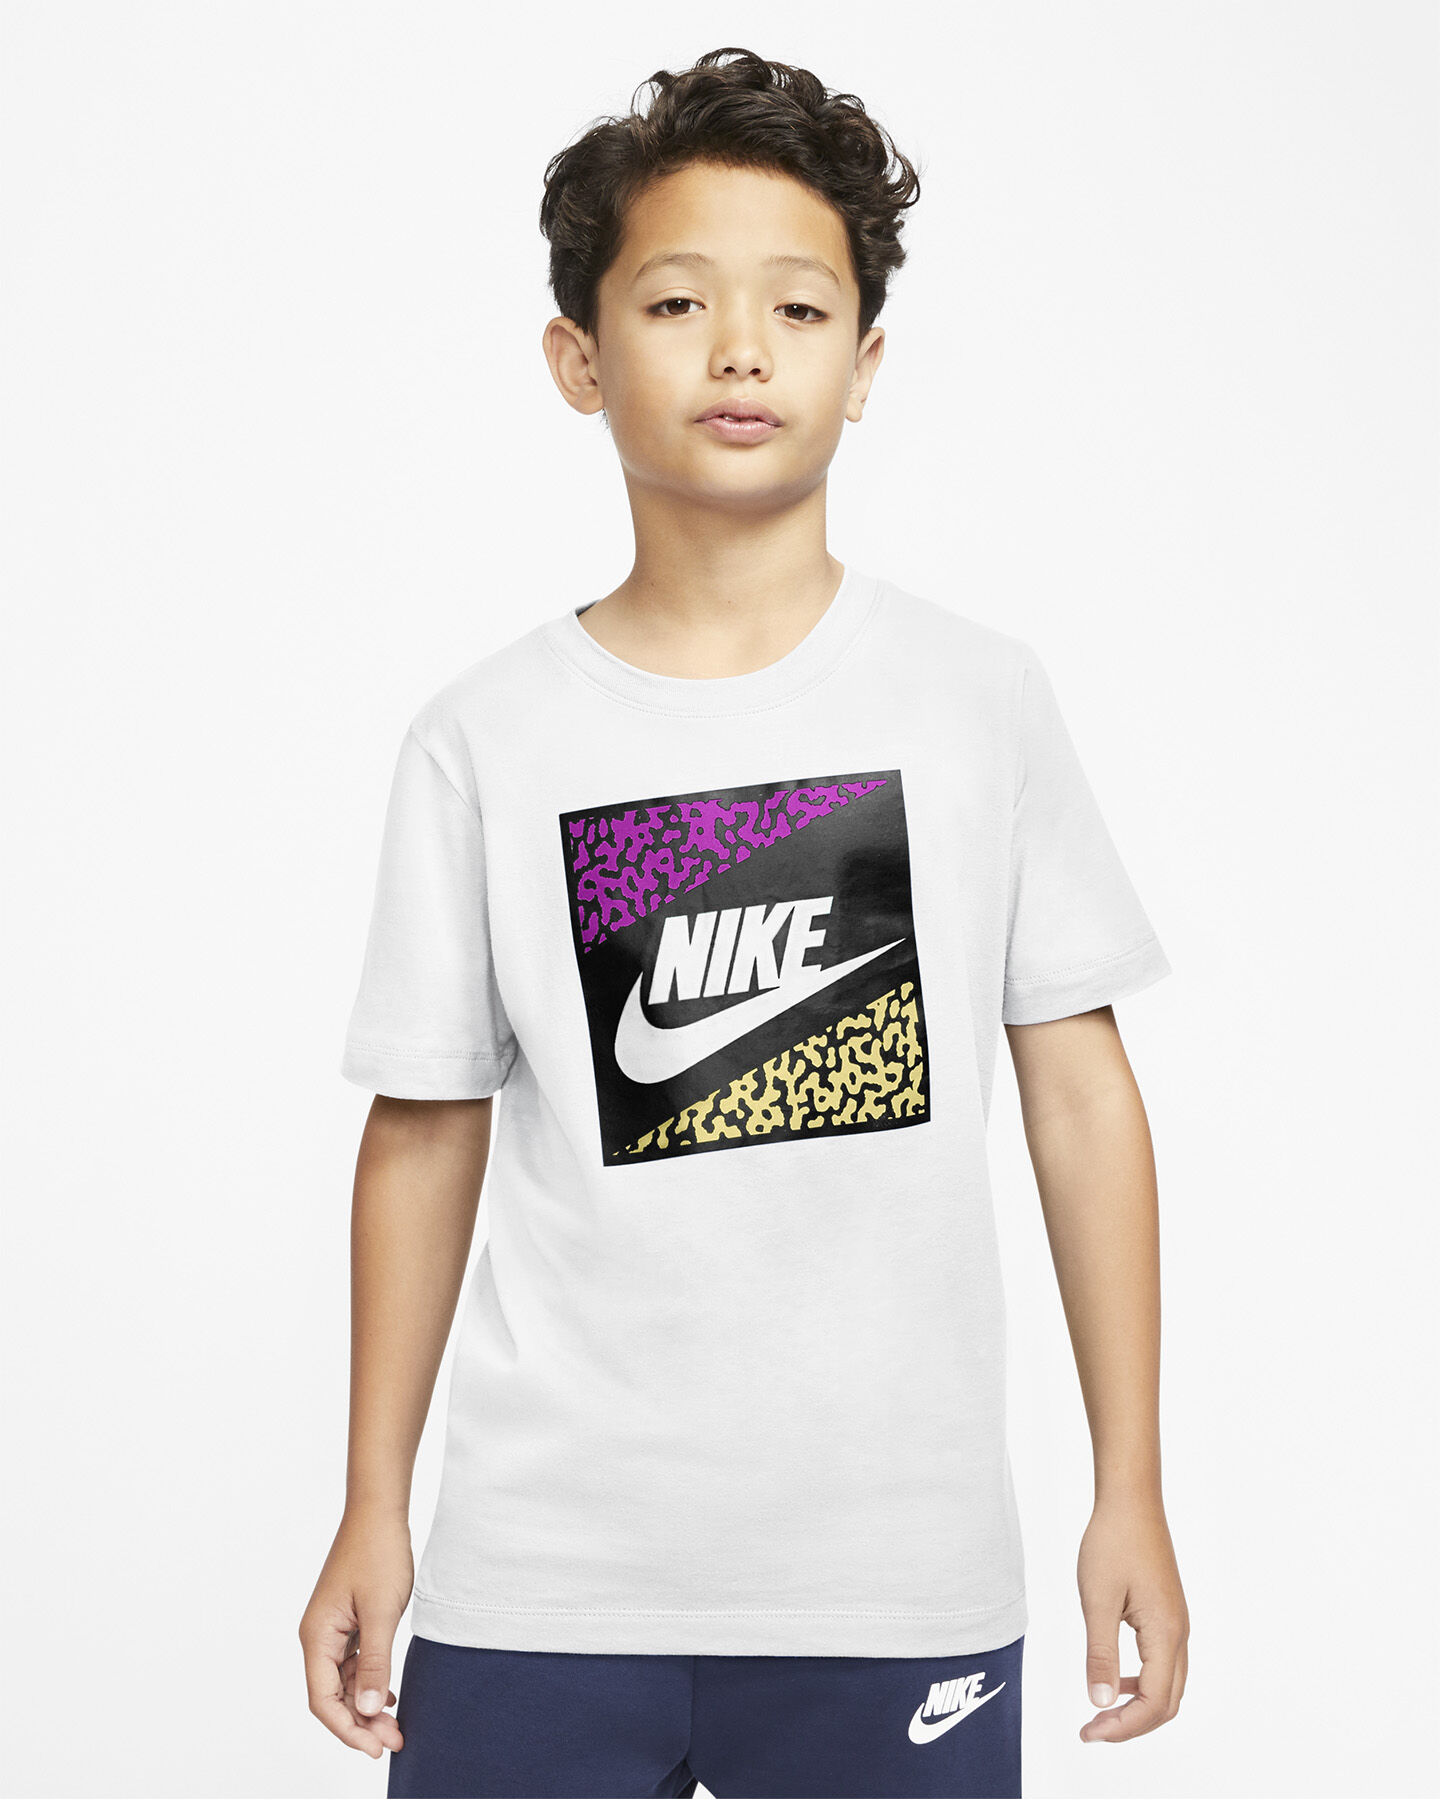  T-Shirt NIKE FUTURA JR S5197420|100|S scatto 2